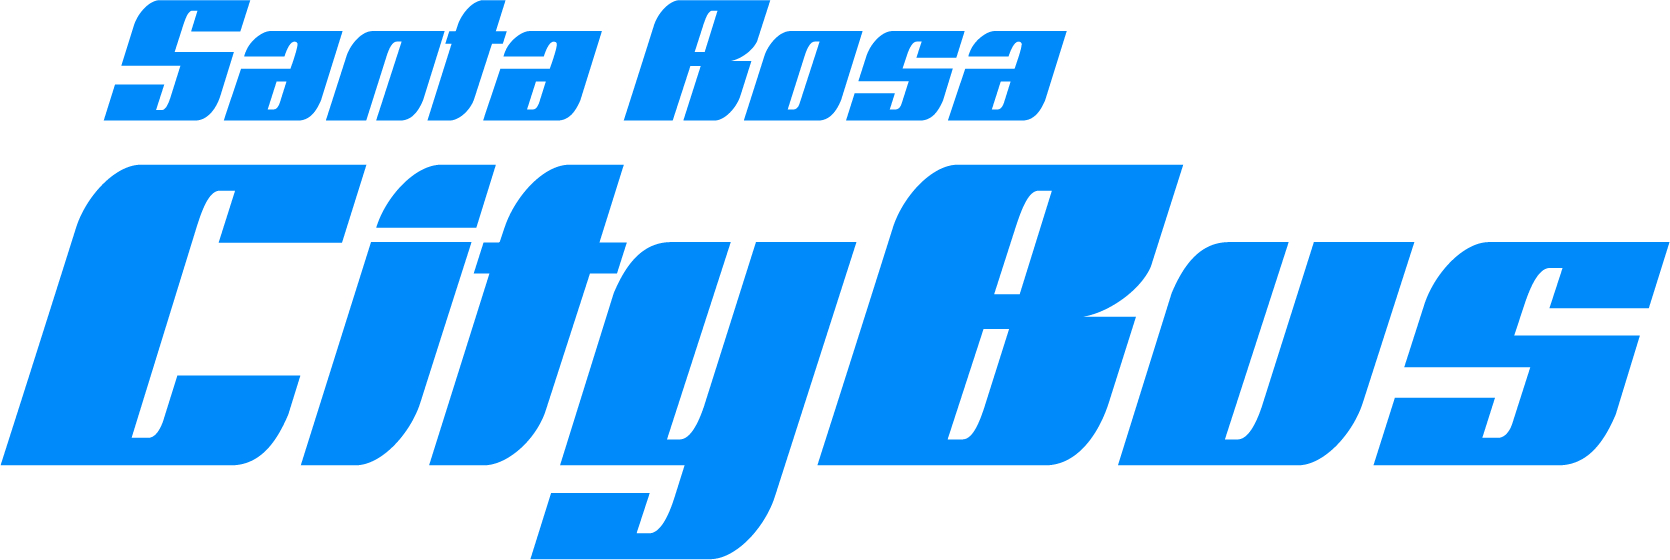 Image of Citybus Color Logo logo